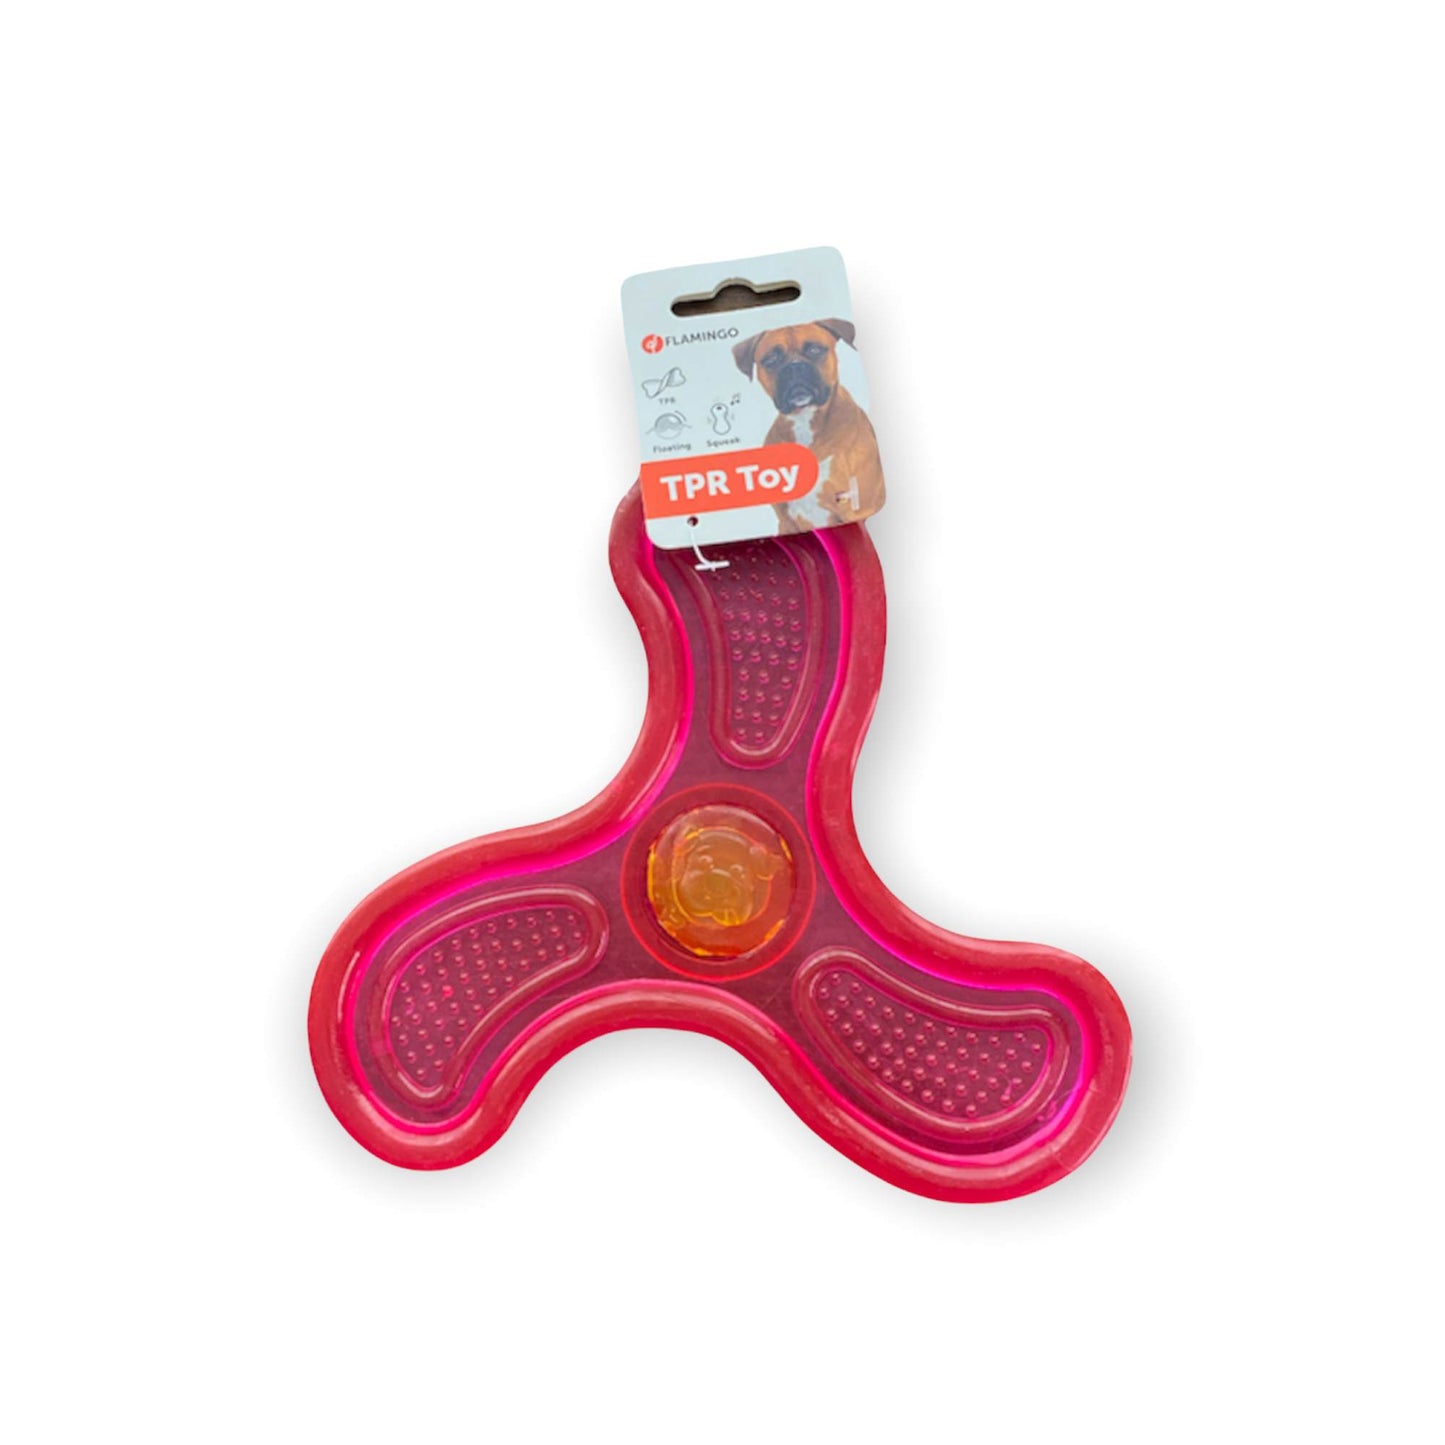 FLAMINGO Frisbee TPR Toy